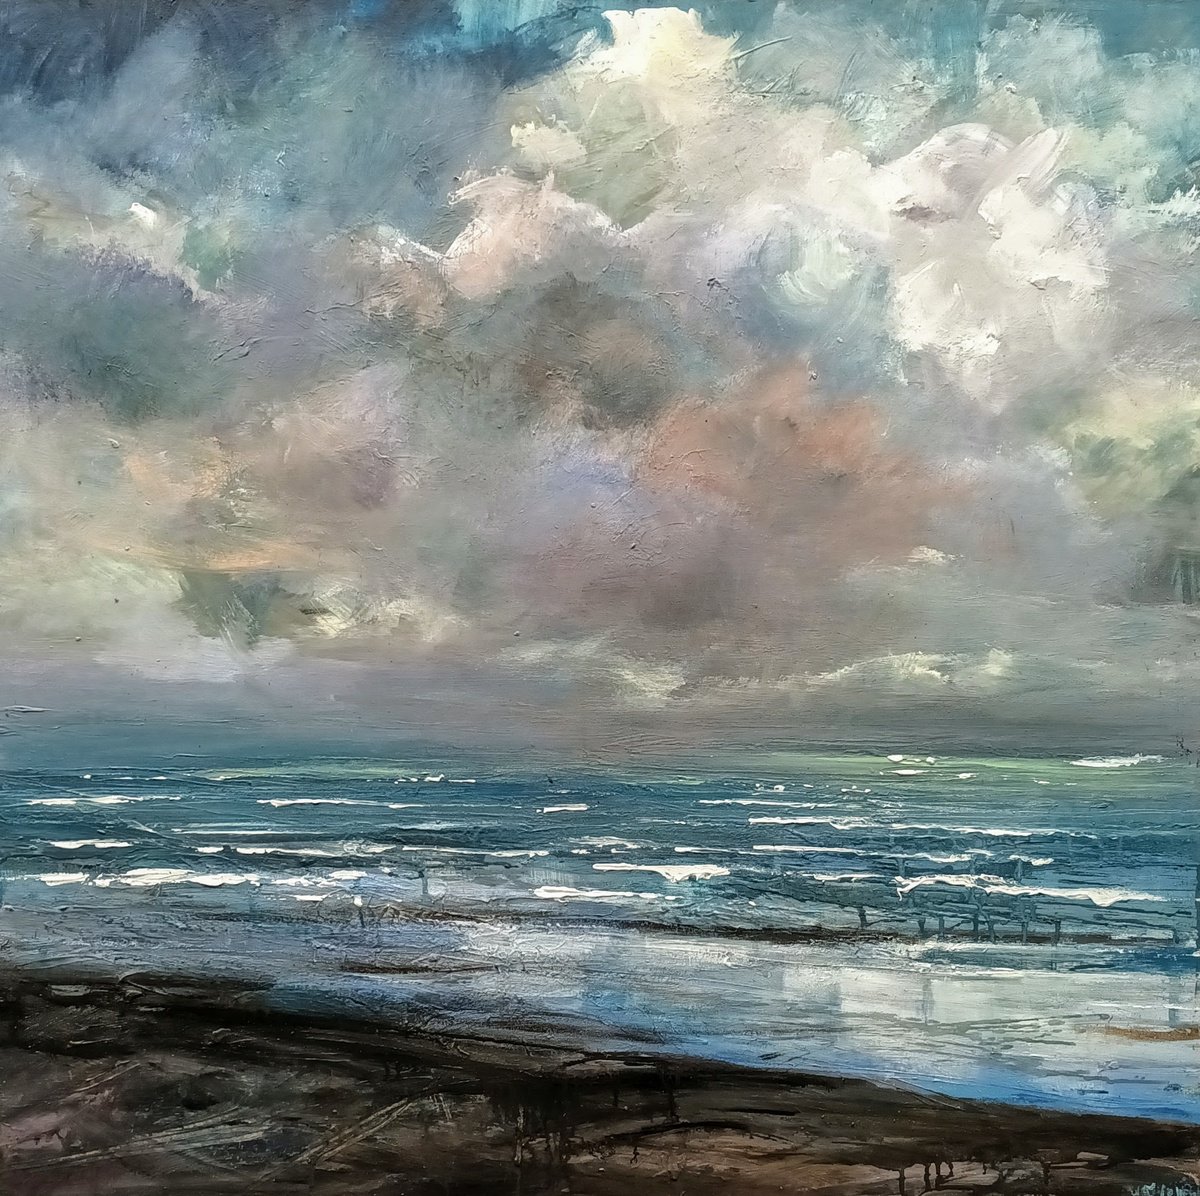 North Sea series 95, approaching storm by Wim van de Wege